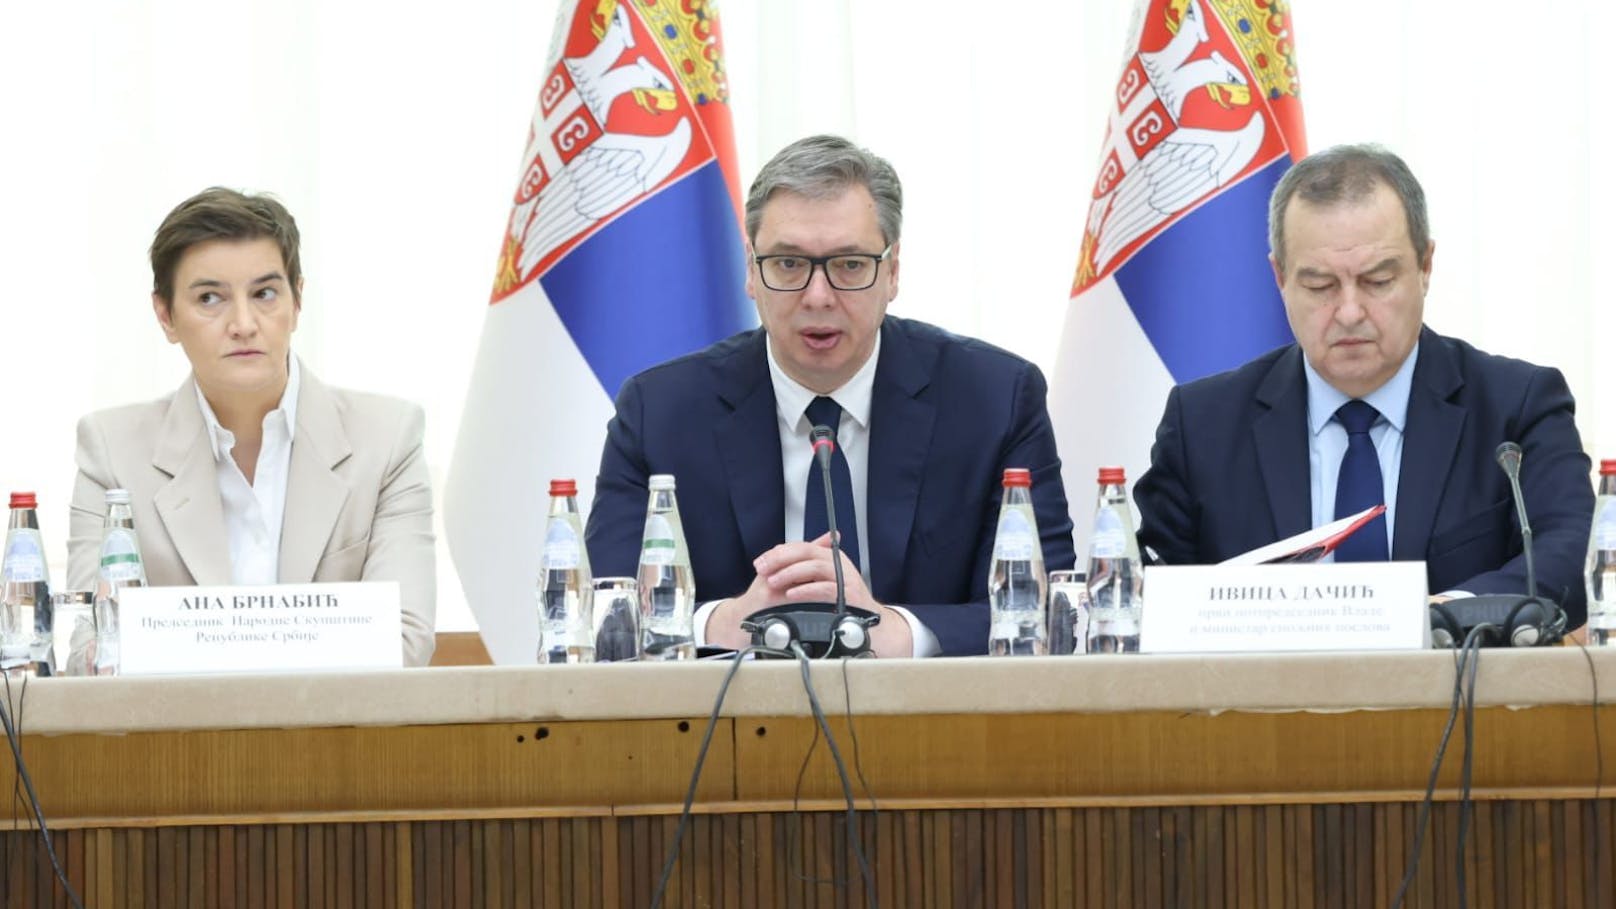 Serbiens Präsident <a rel="noopener" href="https://www.telegraf.rs/teme/aleksandar-vucic" target="_blank">Aleksandar Vučić</a> gab am Donnerstag bekannt, dass die vermisste Danka tot ist.